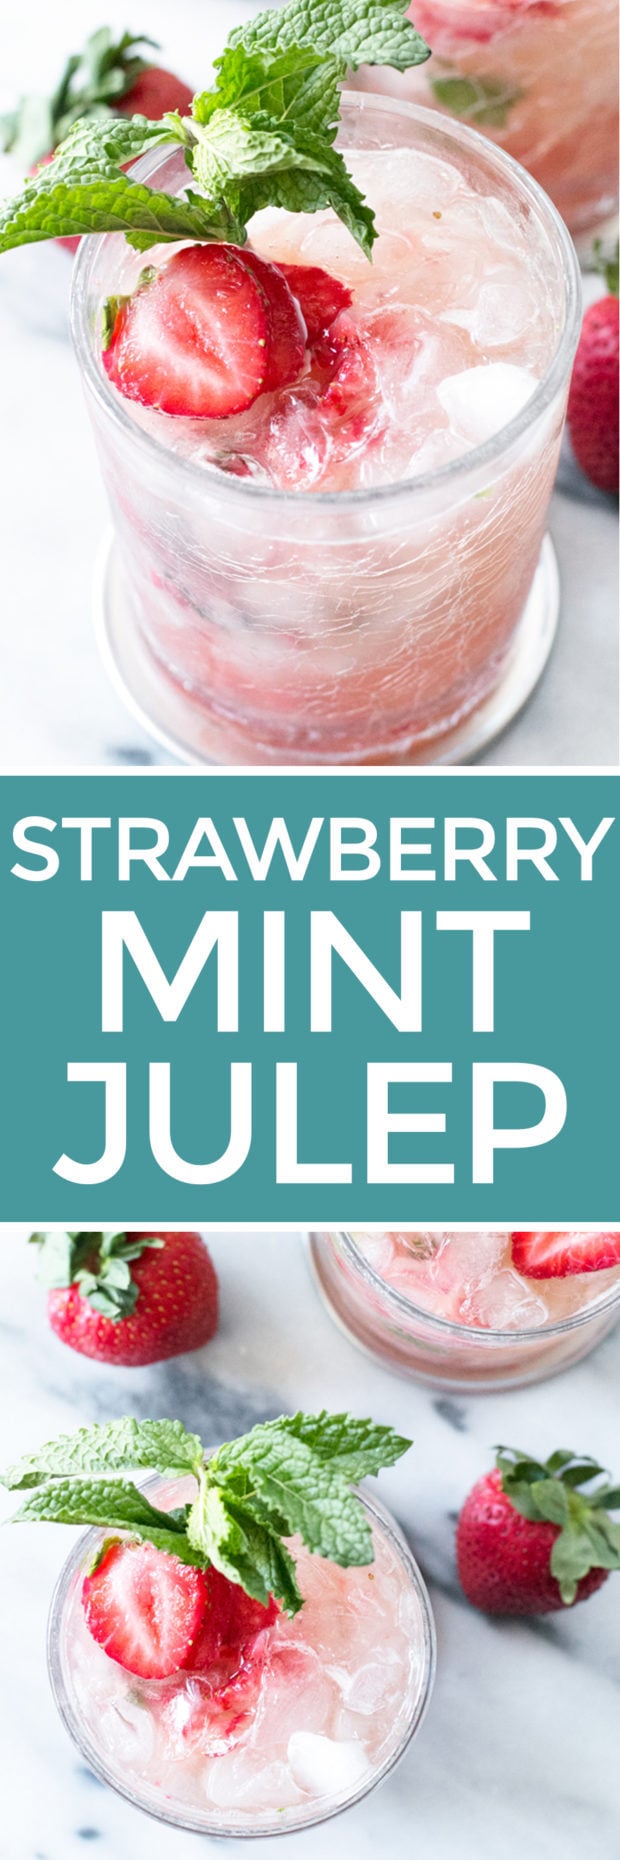 Strawberry Mint Julep